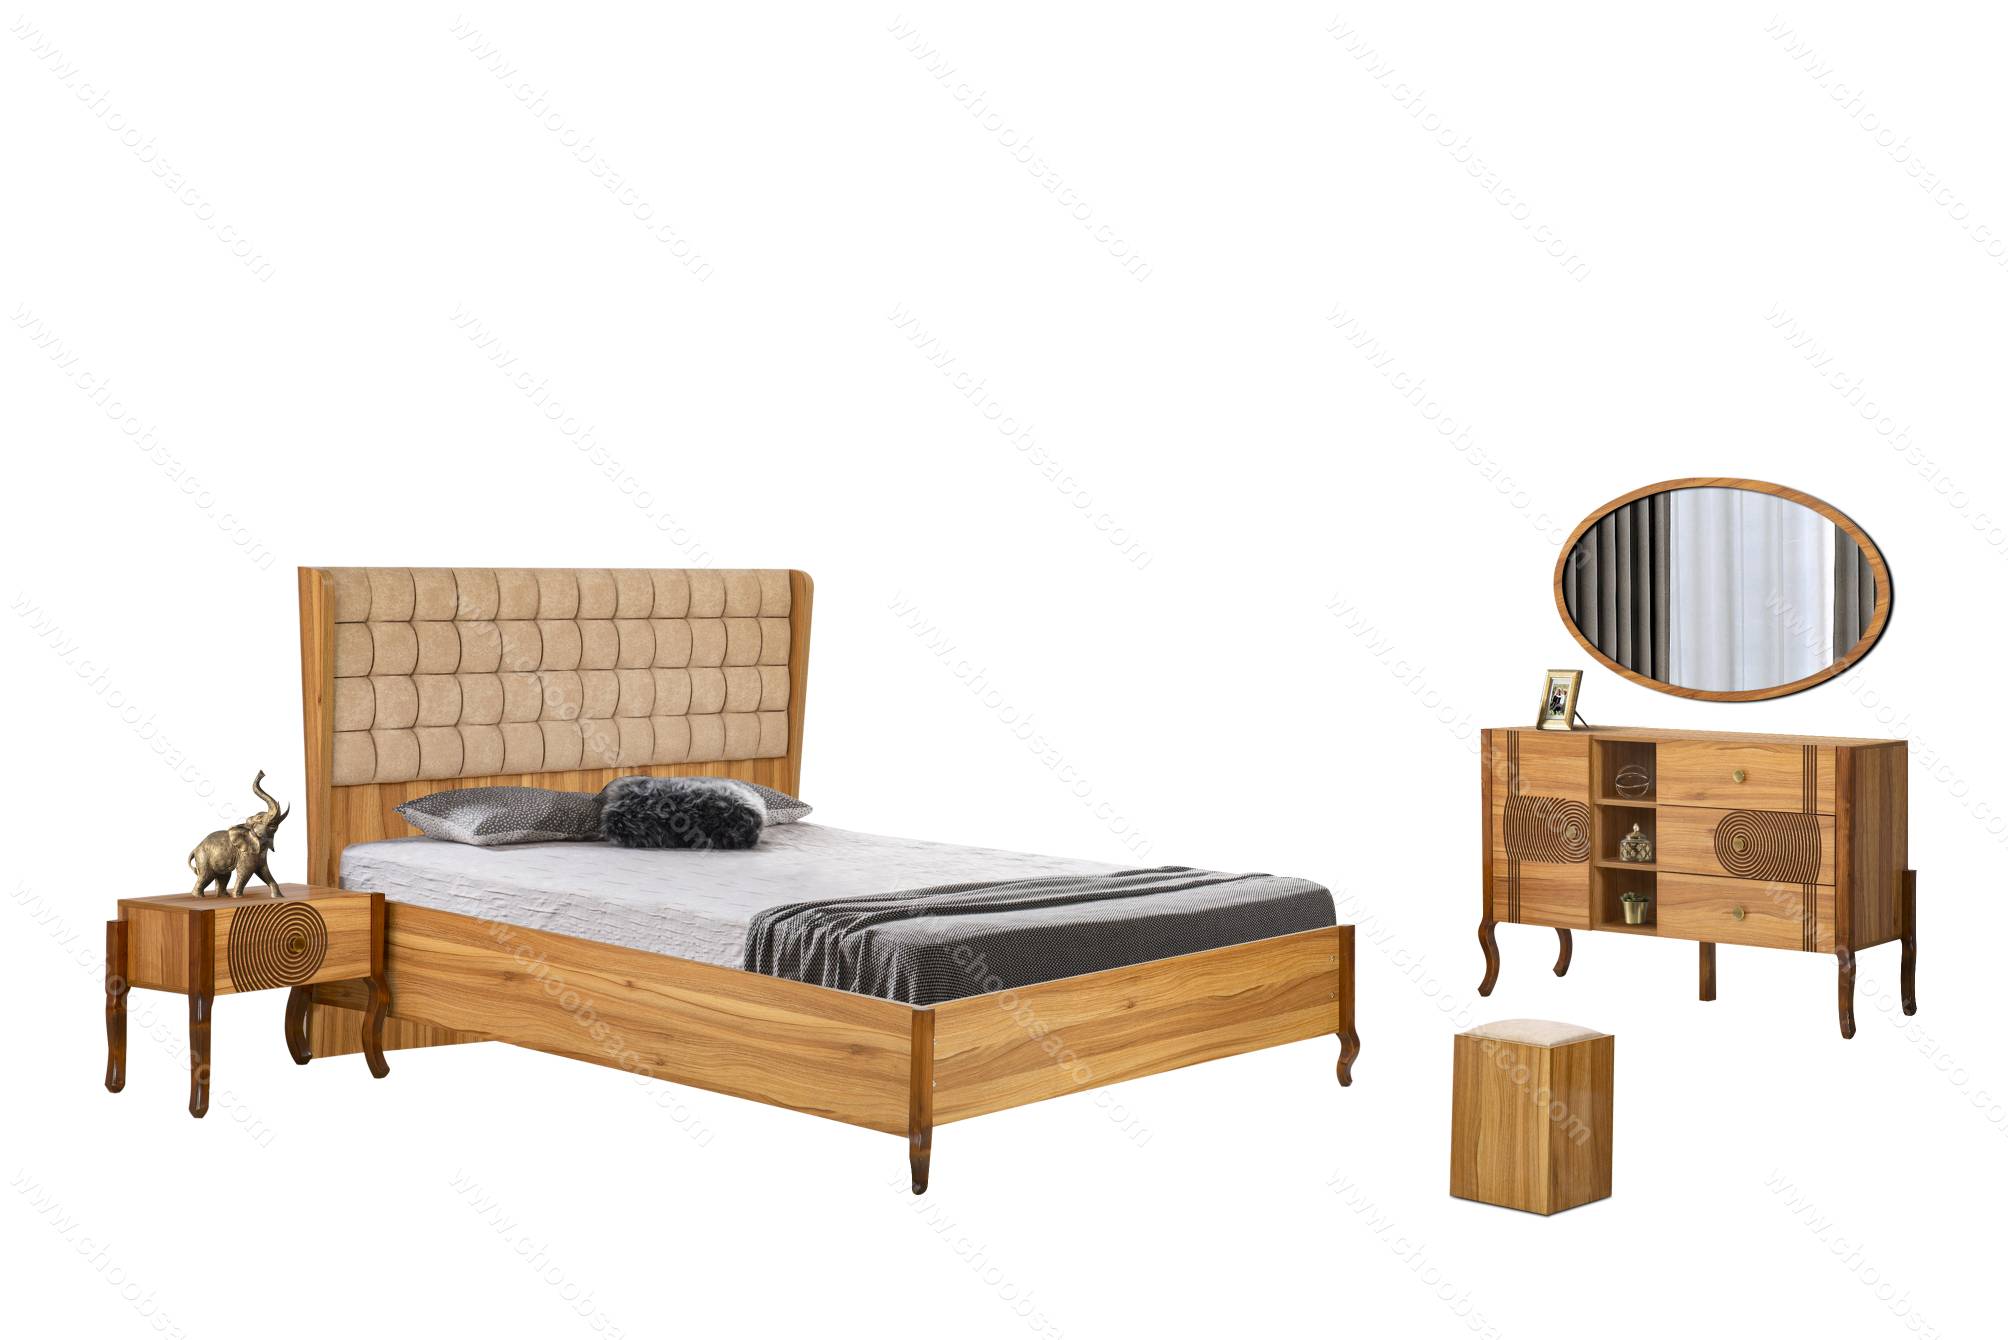 سرویس خواب دو نفره مدل رونیکا - سرویس خواب | تخت خواب | فروشگاه چوبسا سرویسخواب دو نفره مدل رونیکا